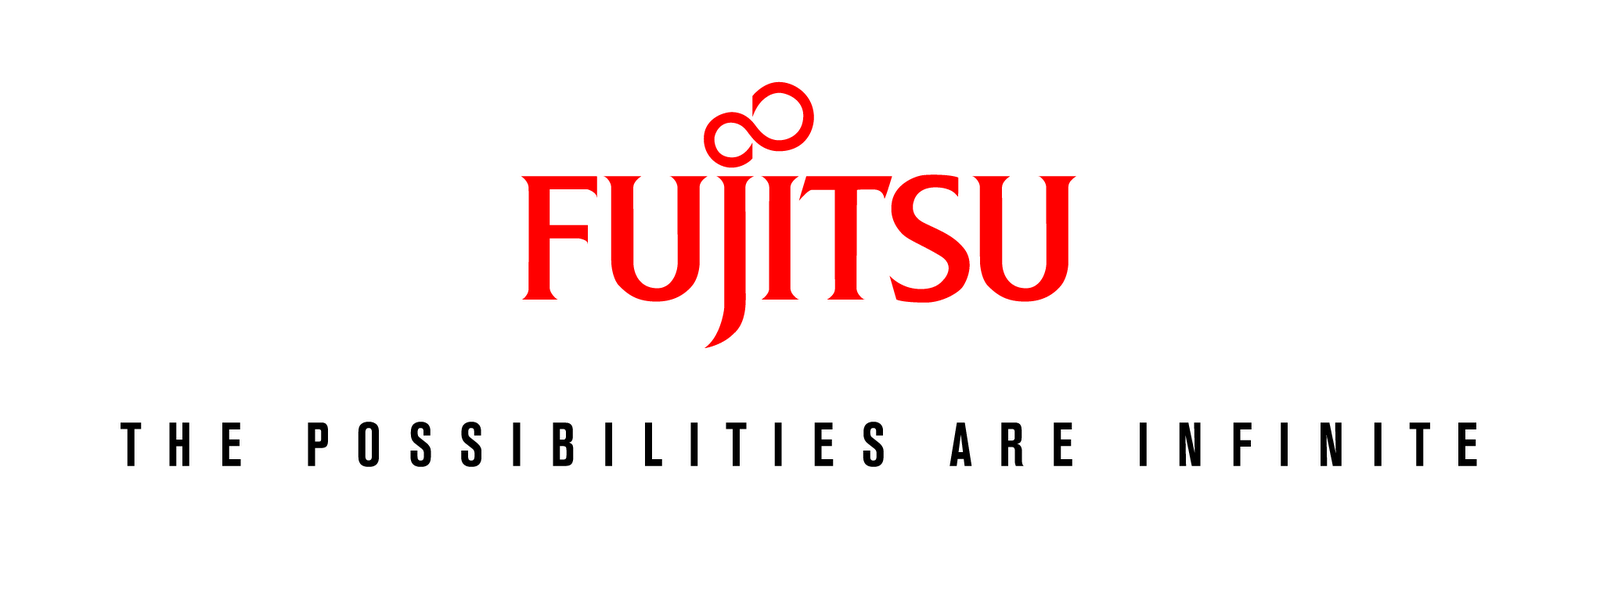 fujitsu fuj02e3 system extension utility